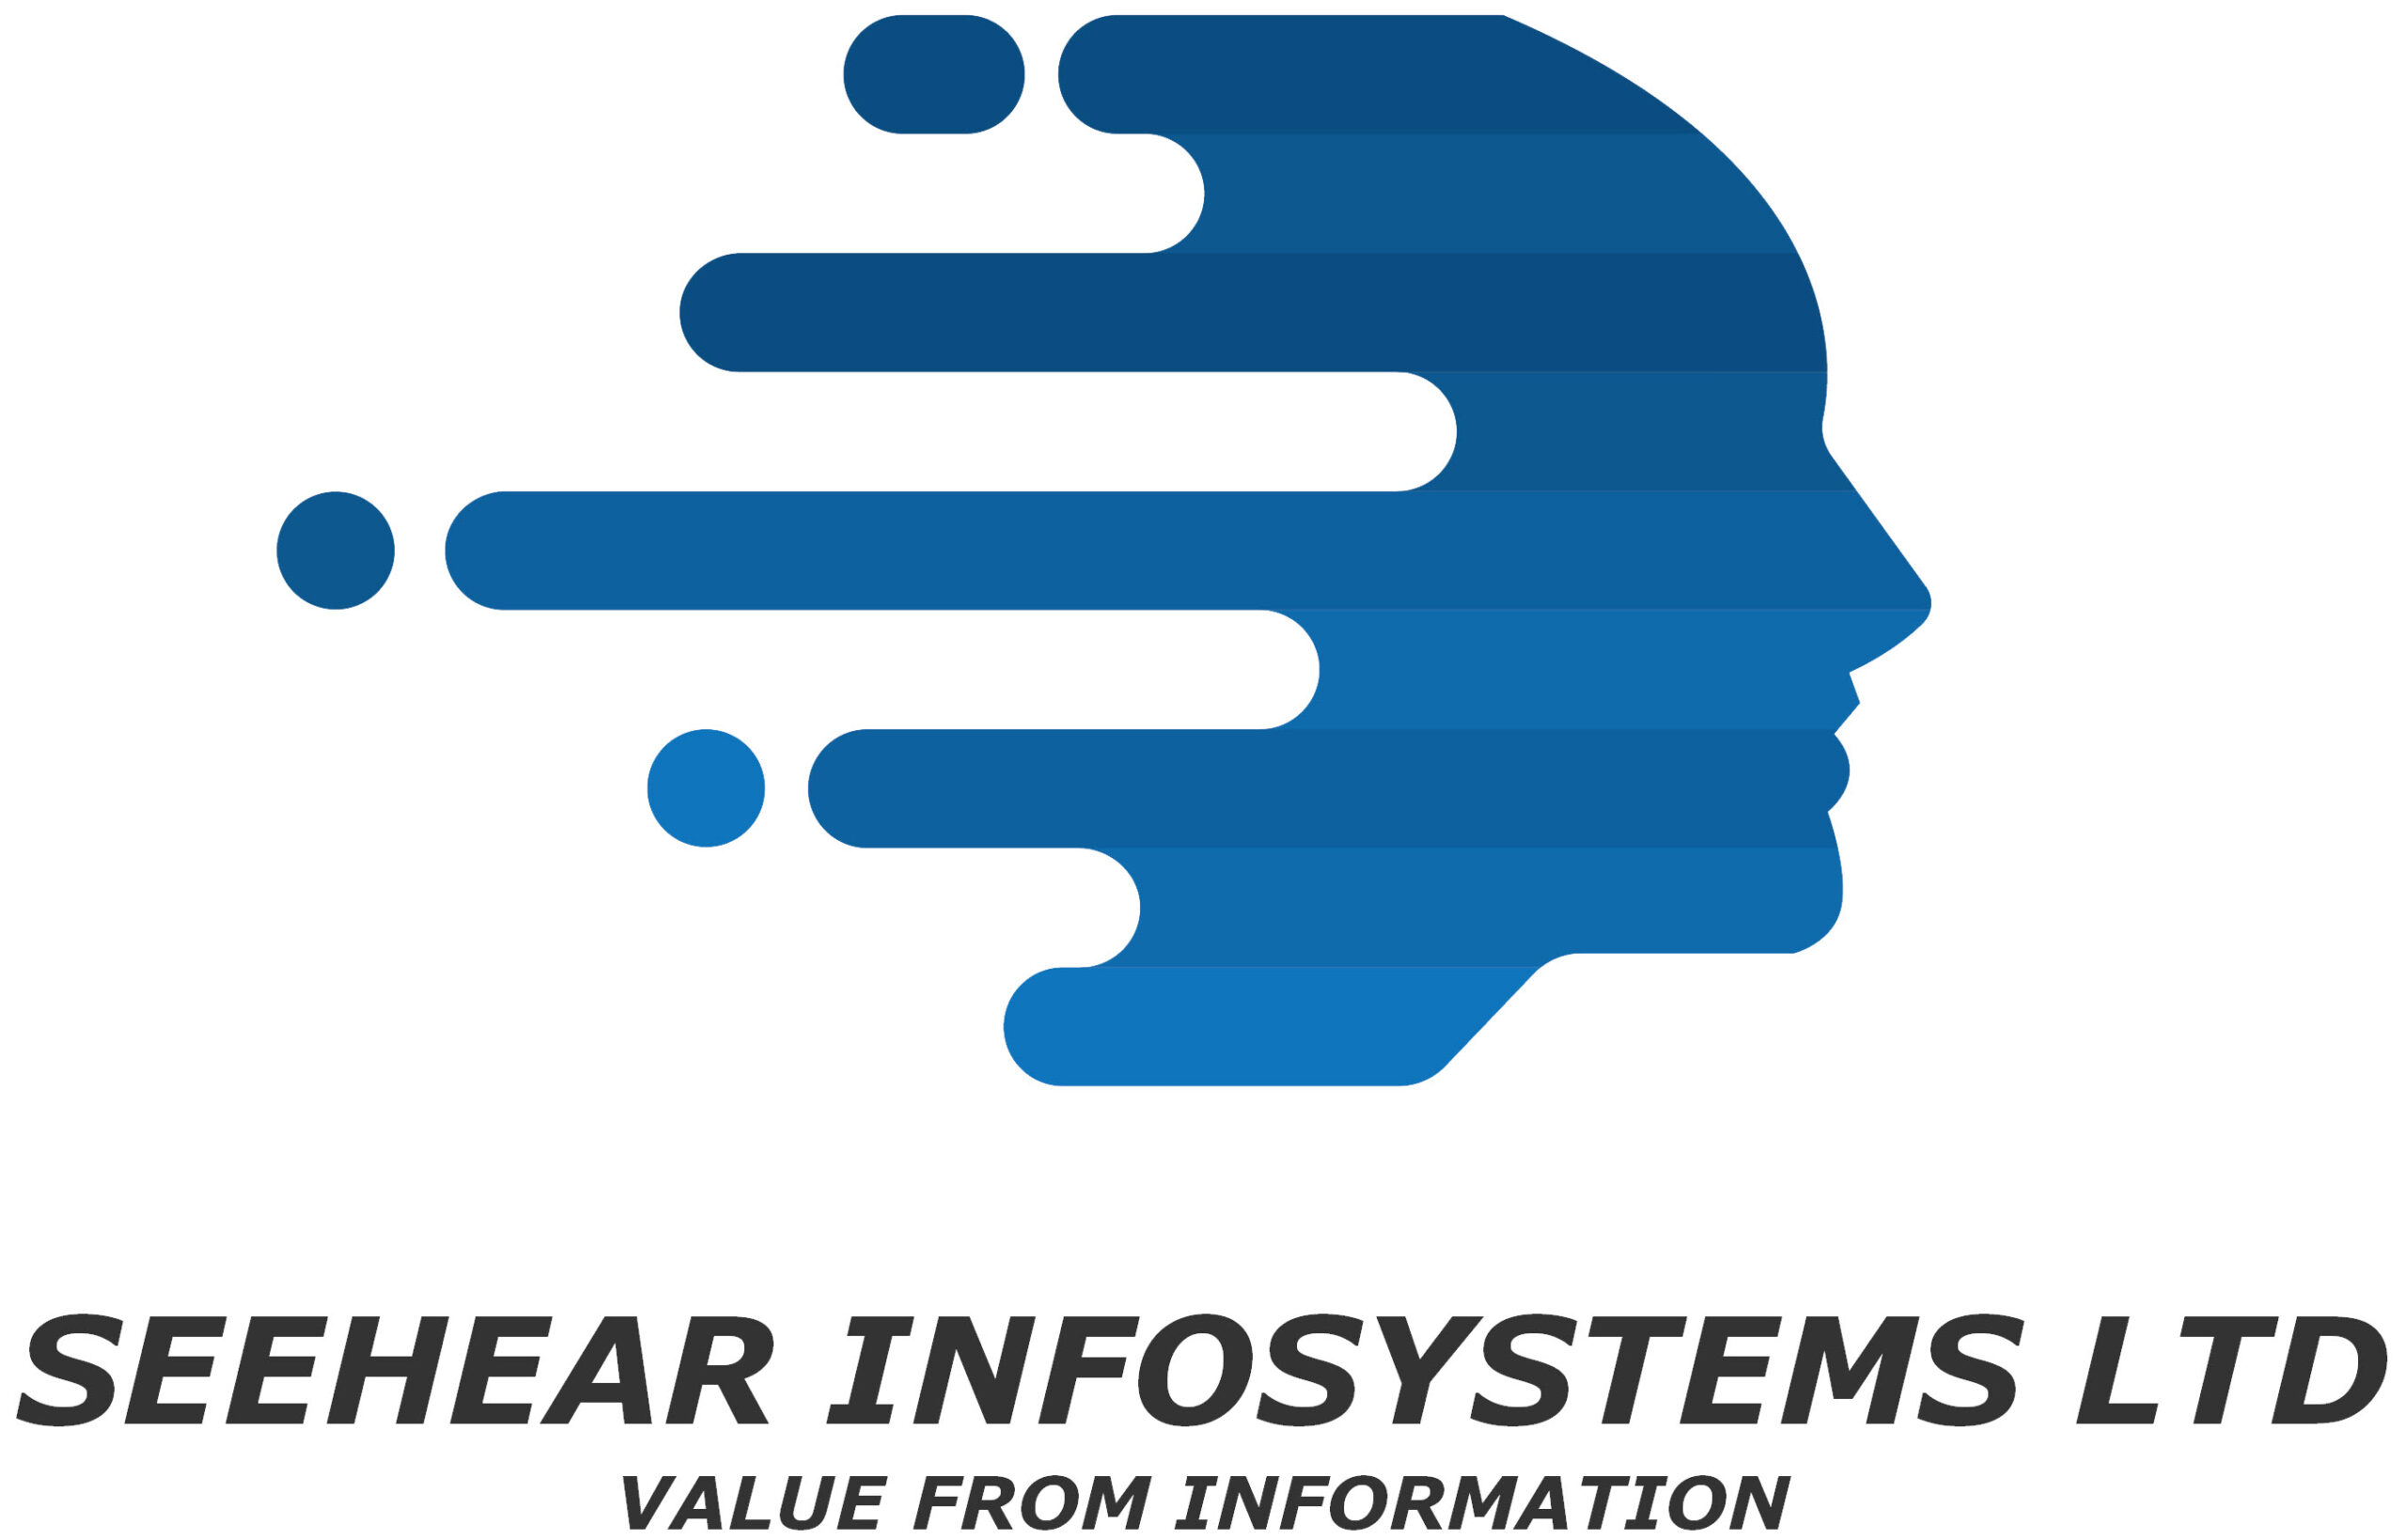 SeeHear InfoSystems Ltd.